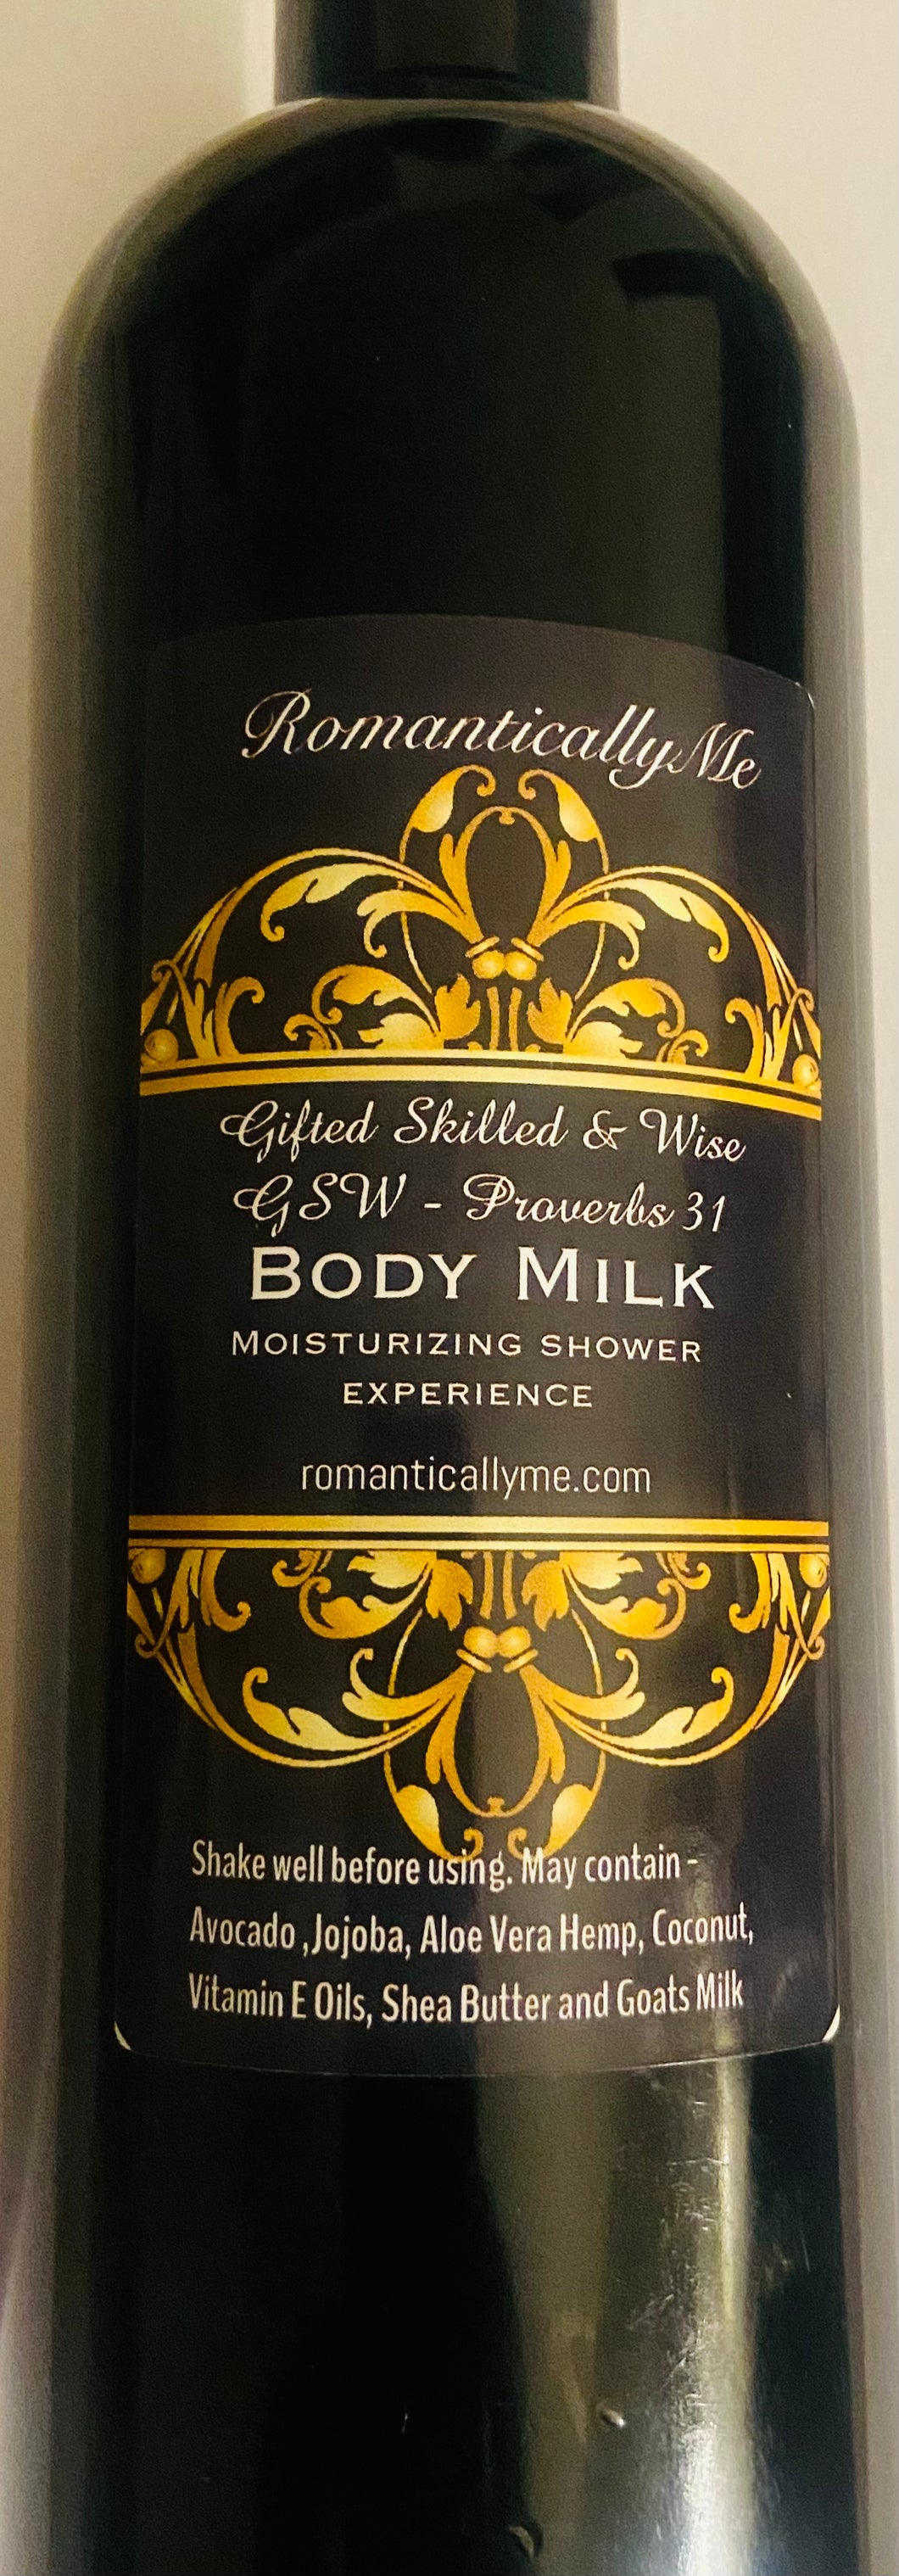 Gifted Skilled & Wise “GSW” Body Milk